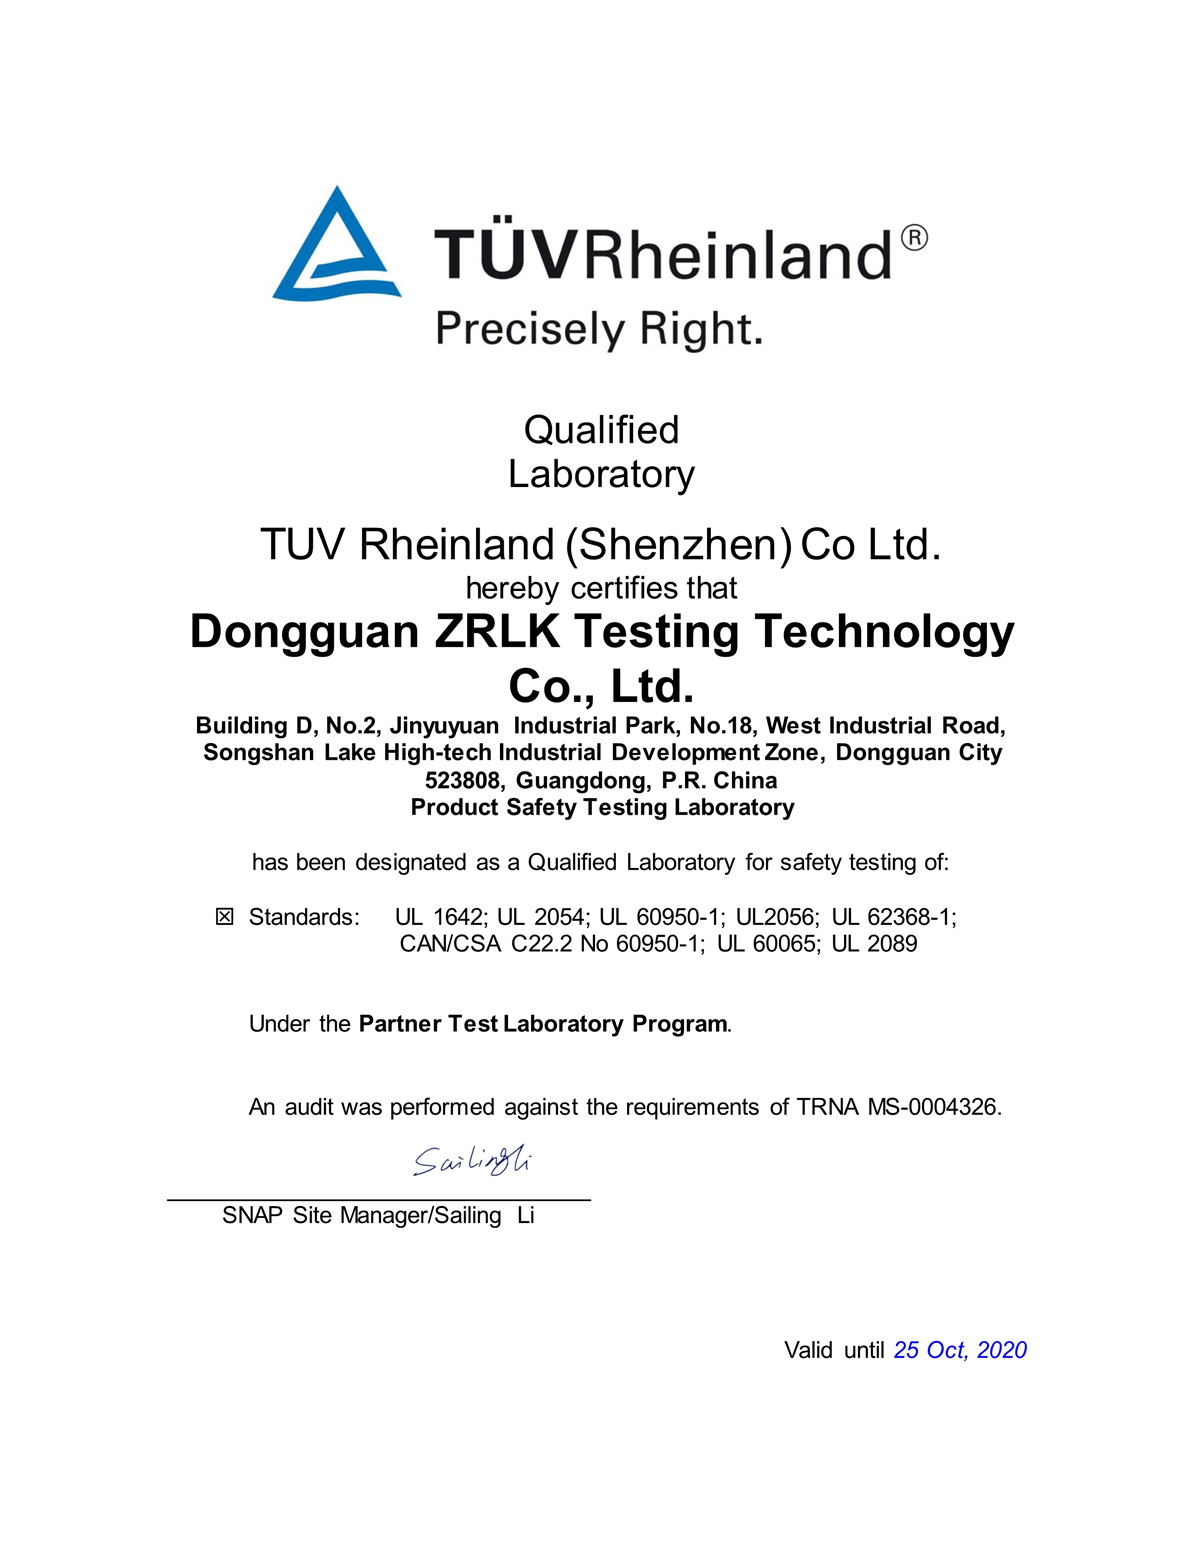 TUV Rhine_PTL Assessment Certificate sign